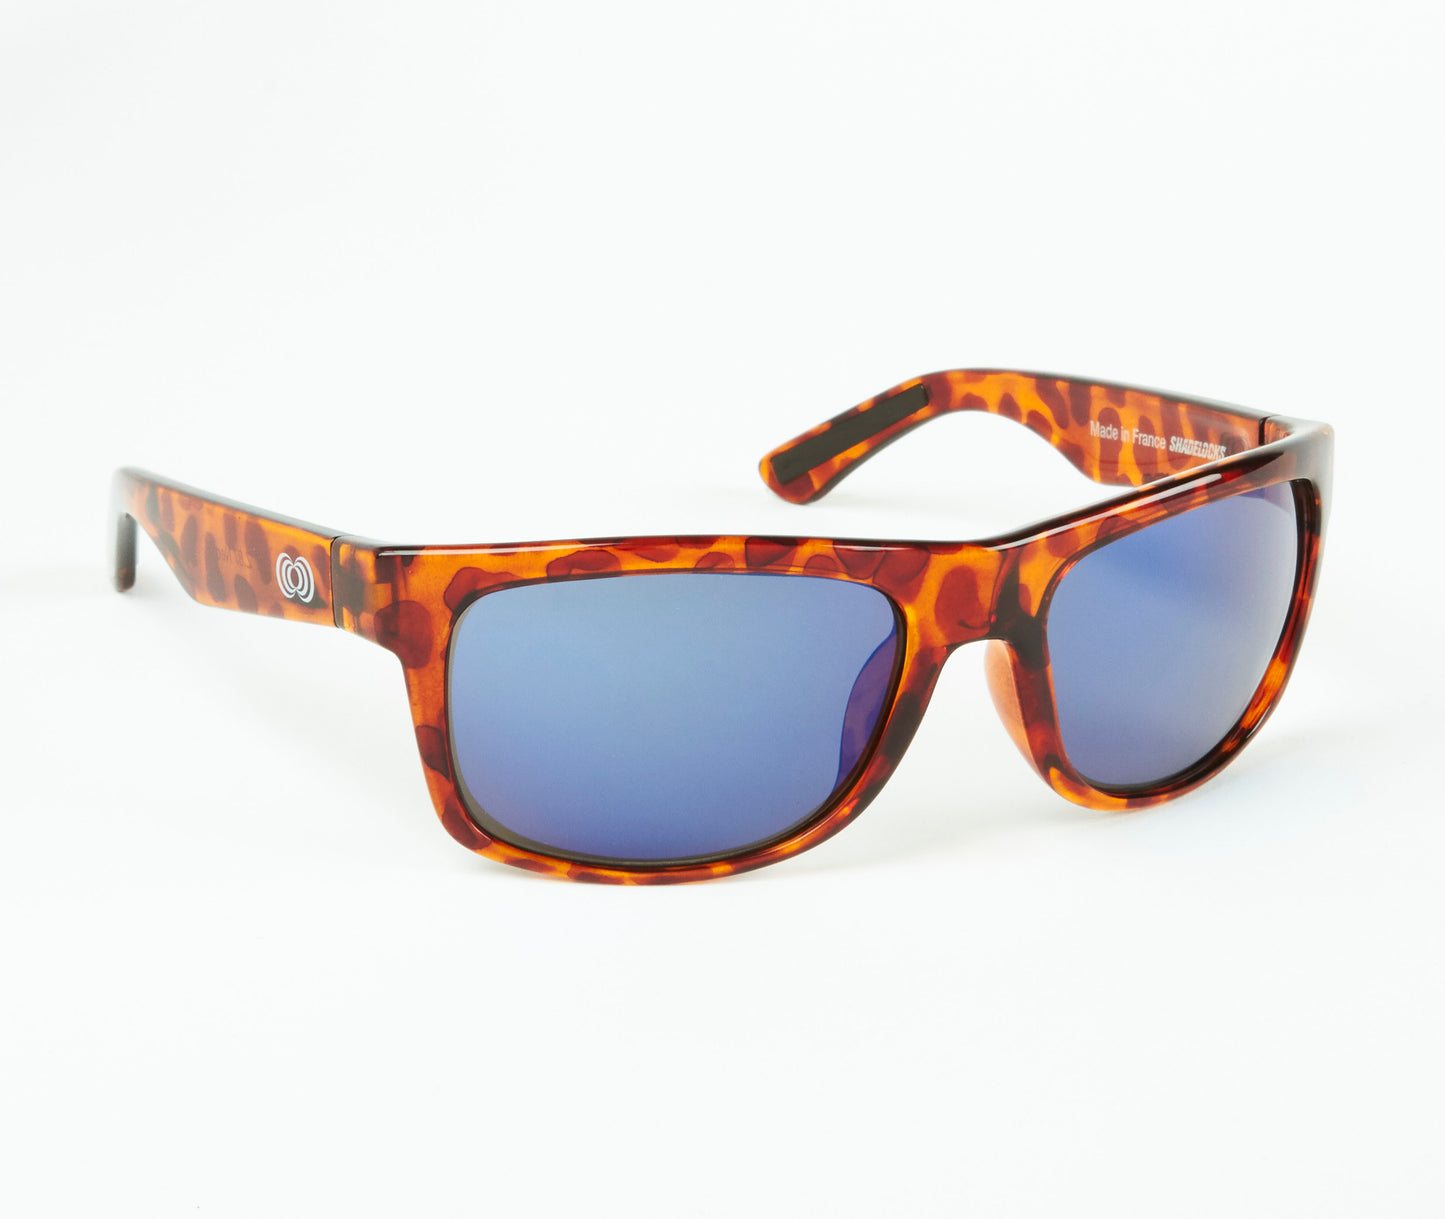 NEO Tortoise Magnetic Sunglasses